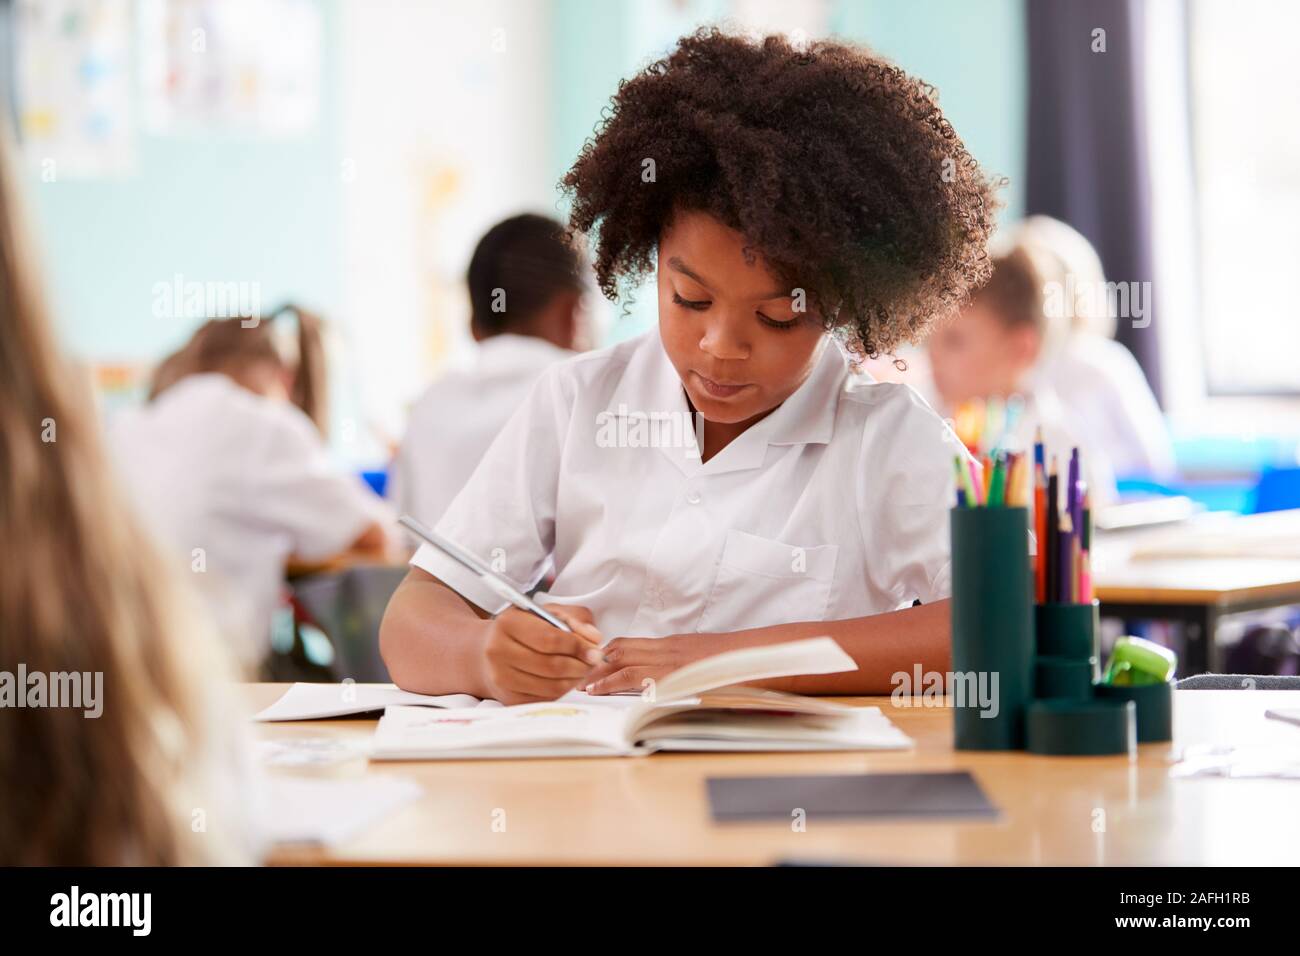 Female Elementary School Pupil Wearing Uniform Working At Desk Stock Photo